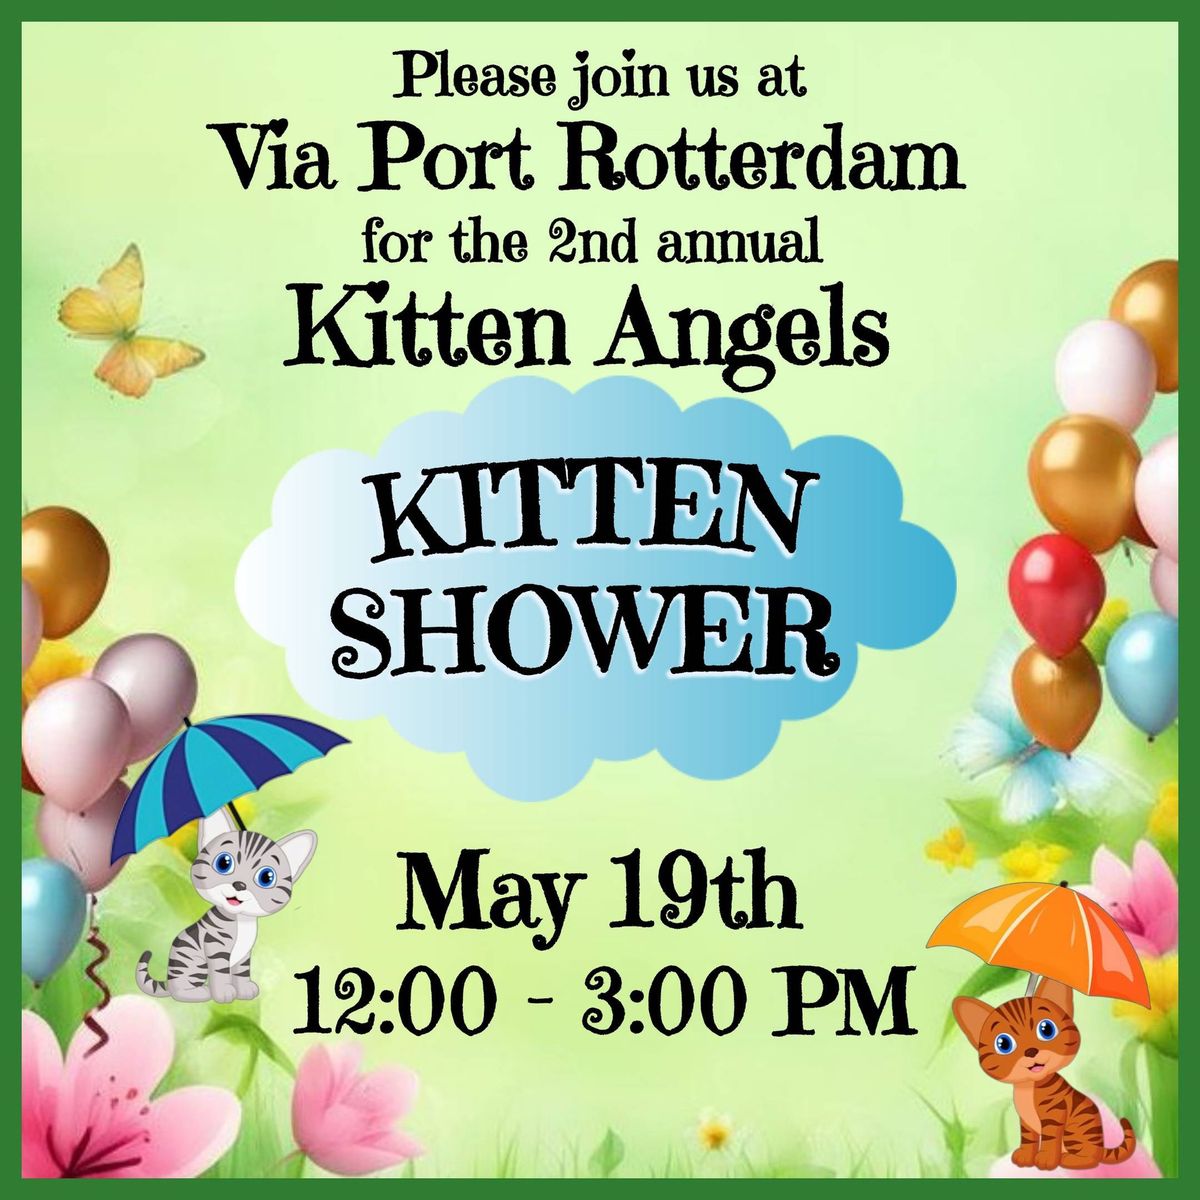 2nd annual Kitten Angels Kitten Shower